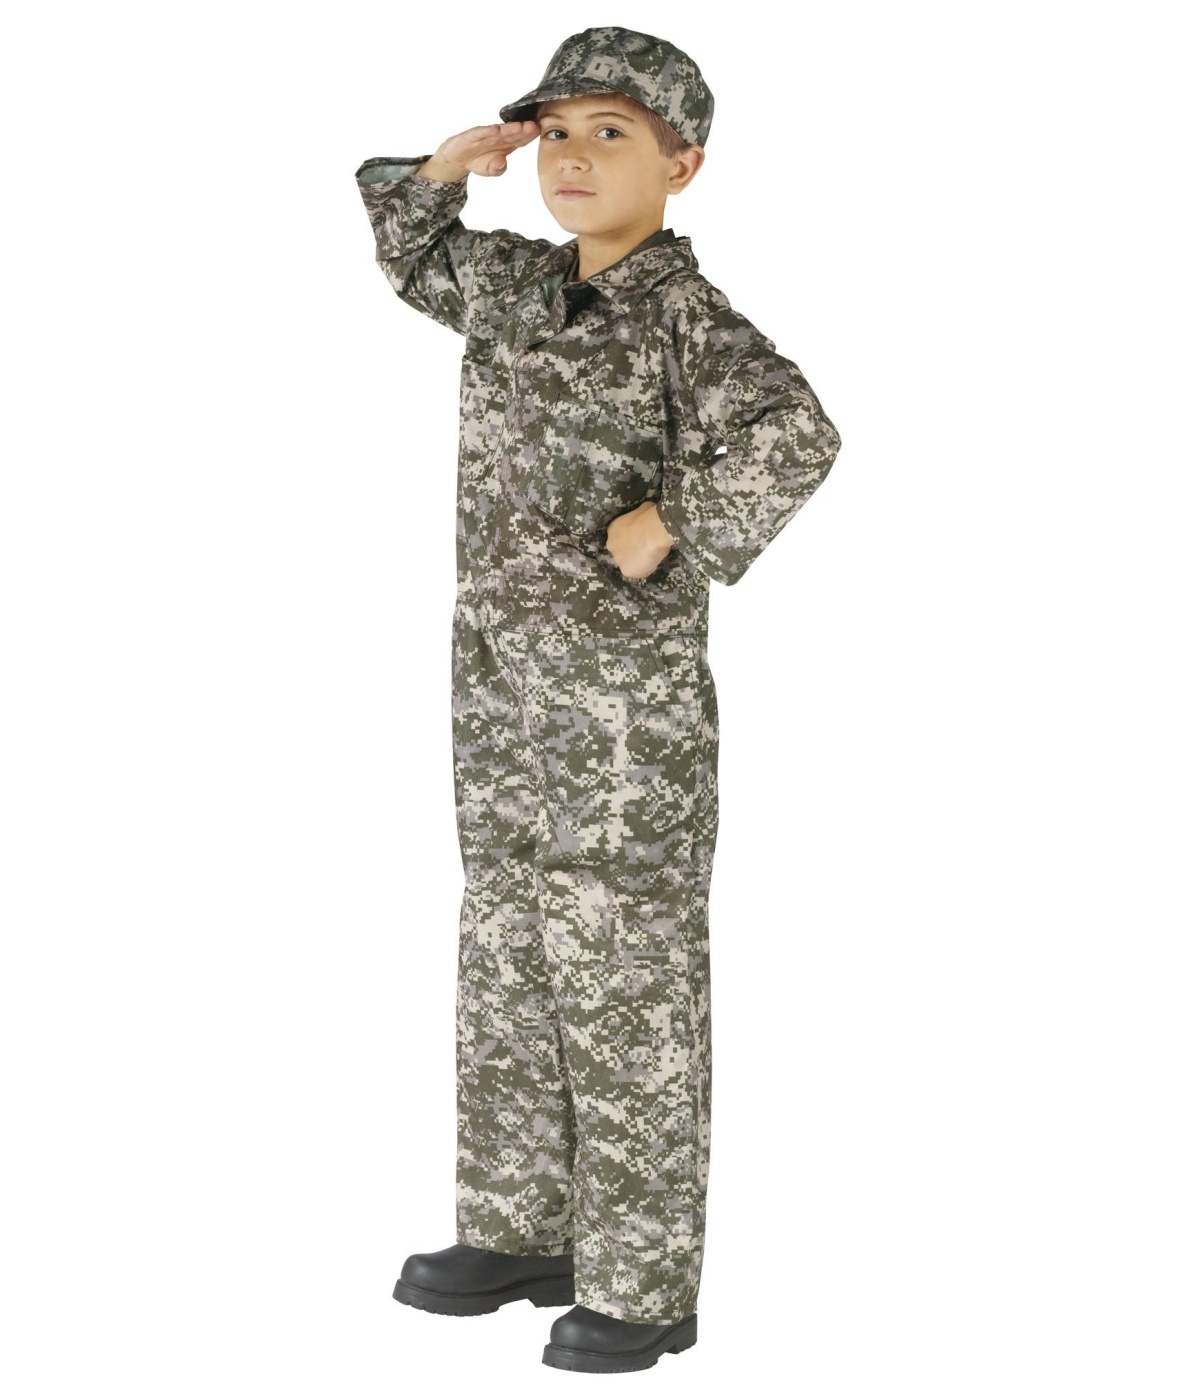  Soldier Boys Costume